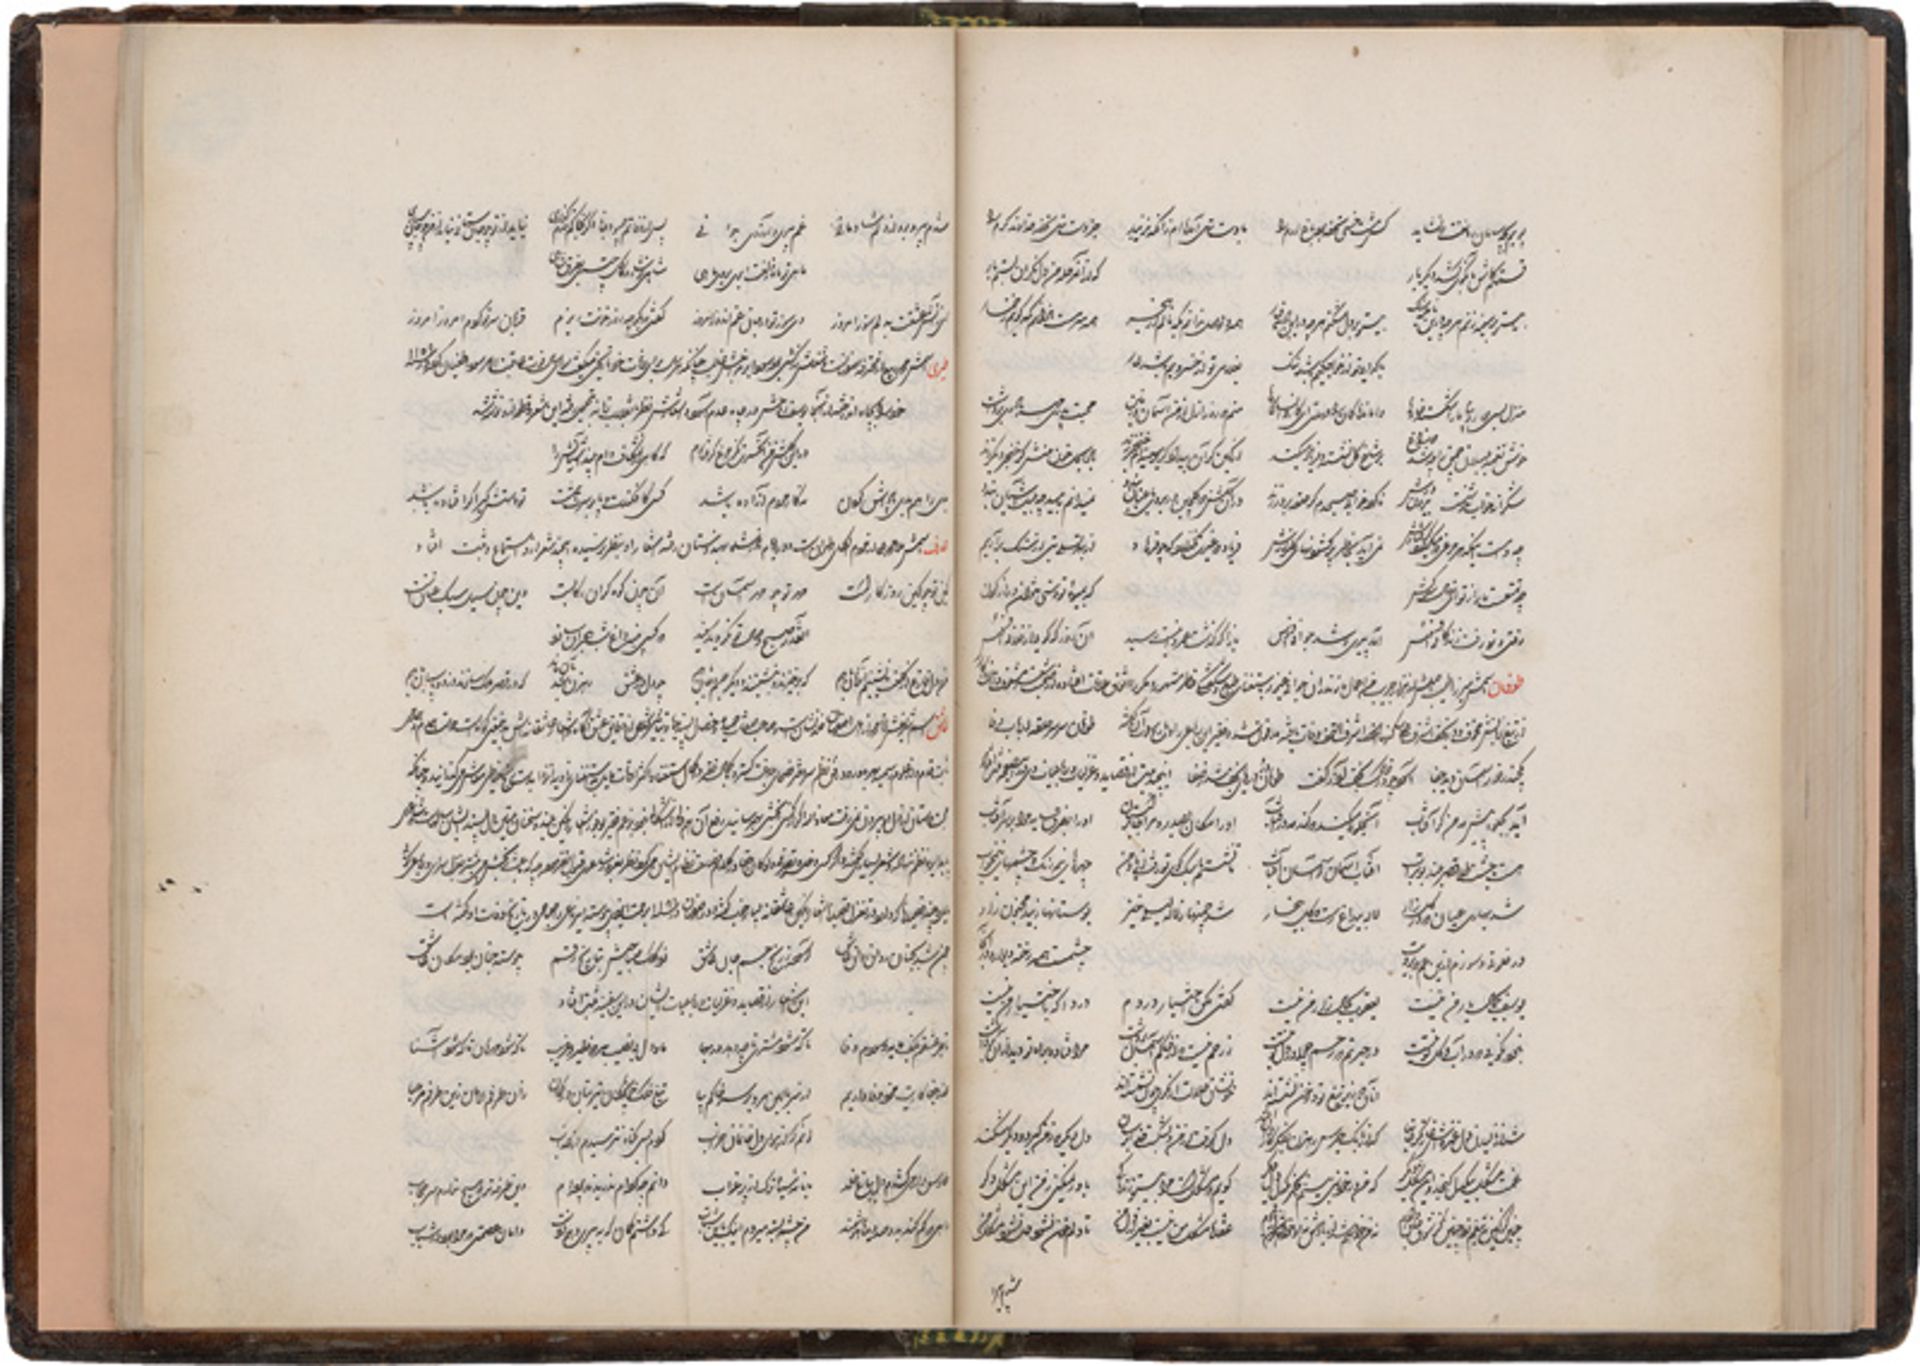 Bigdeli, Azar: Atashkadeh-ye Azar. Arabische Nasta'liq-Handschrift 